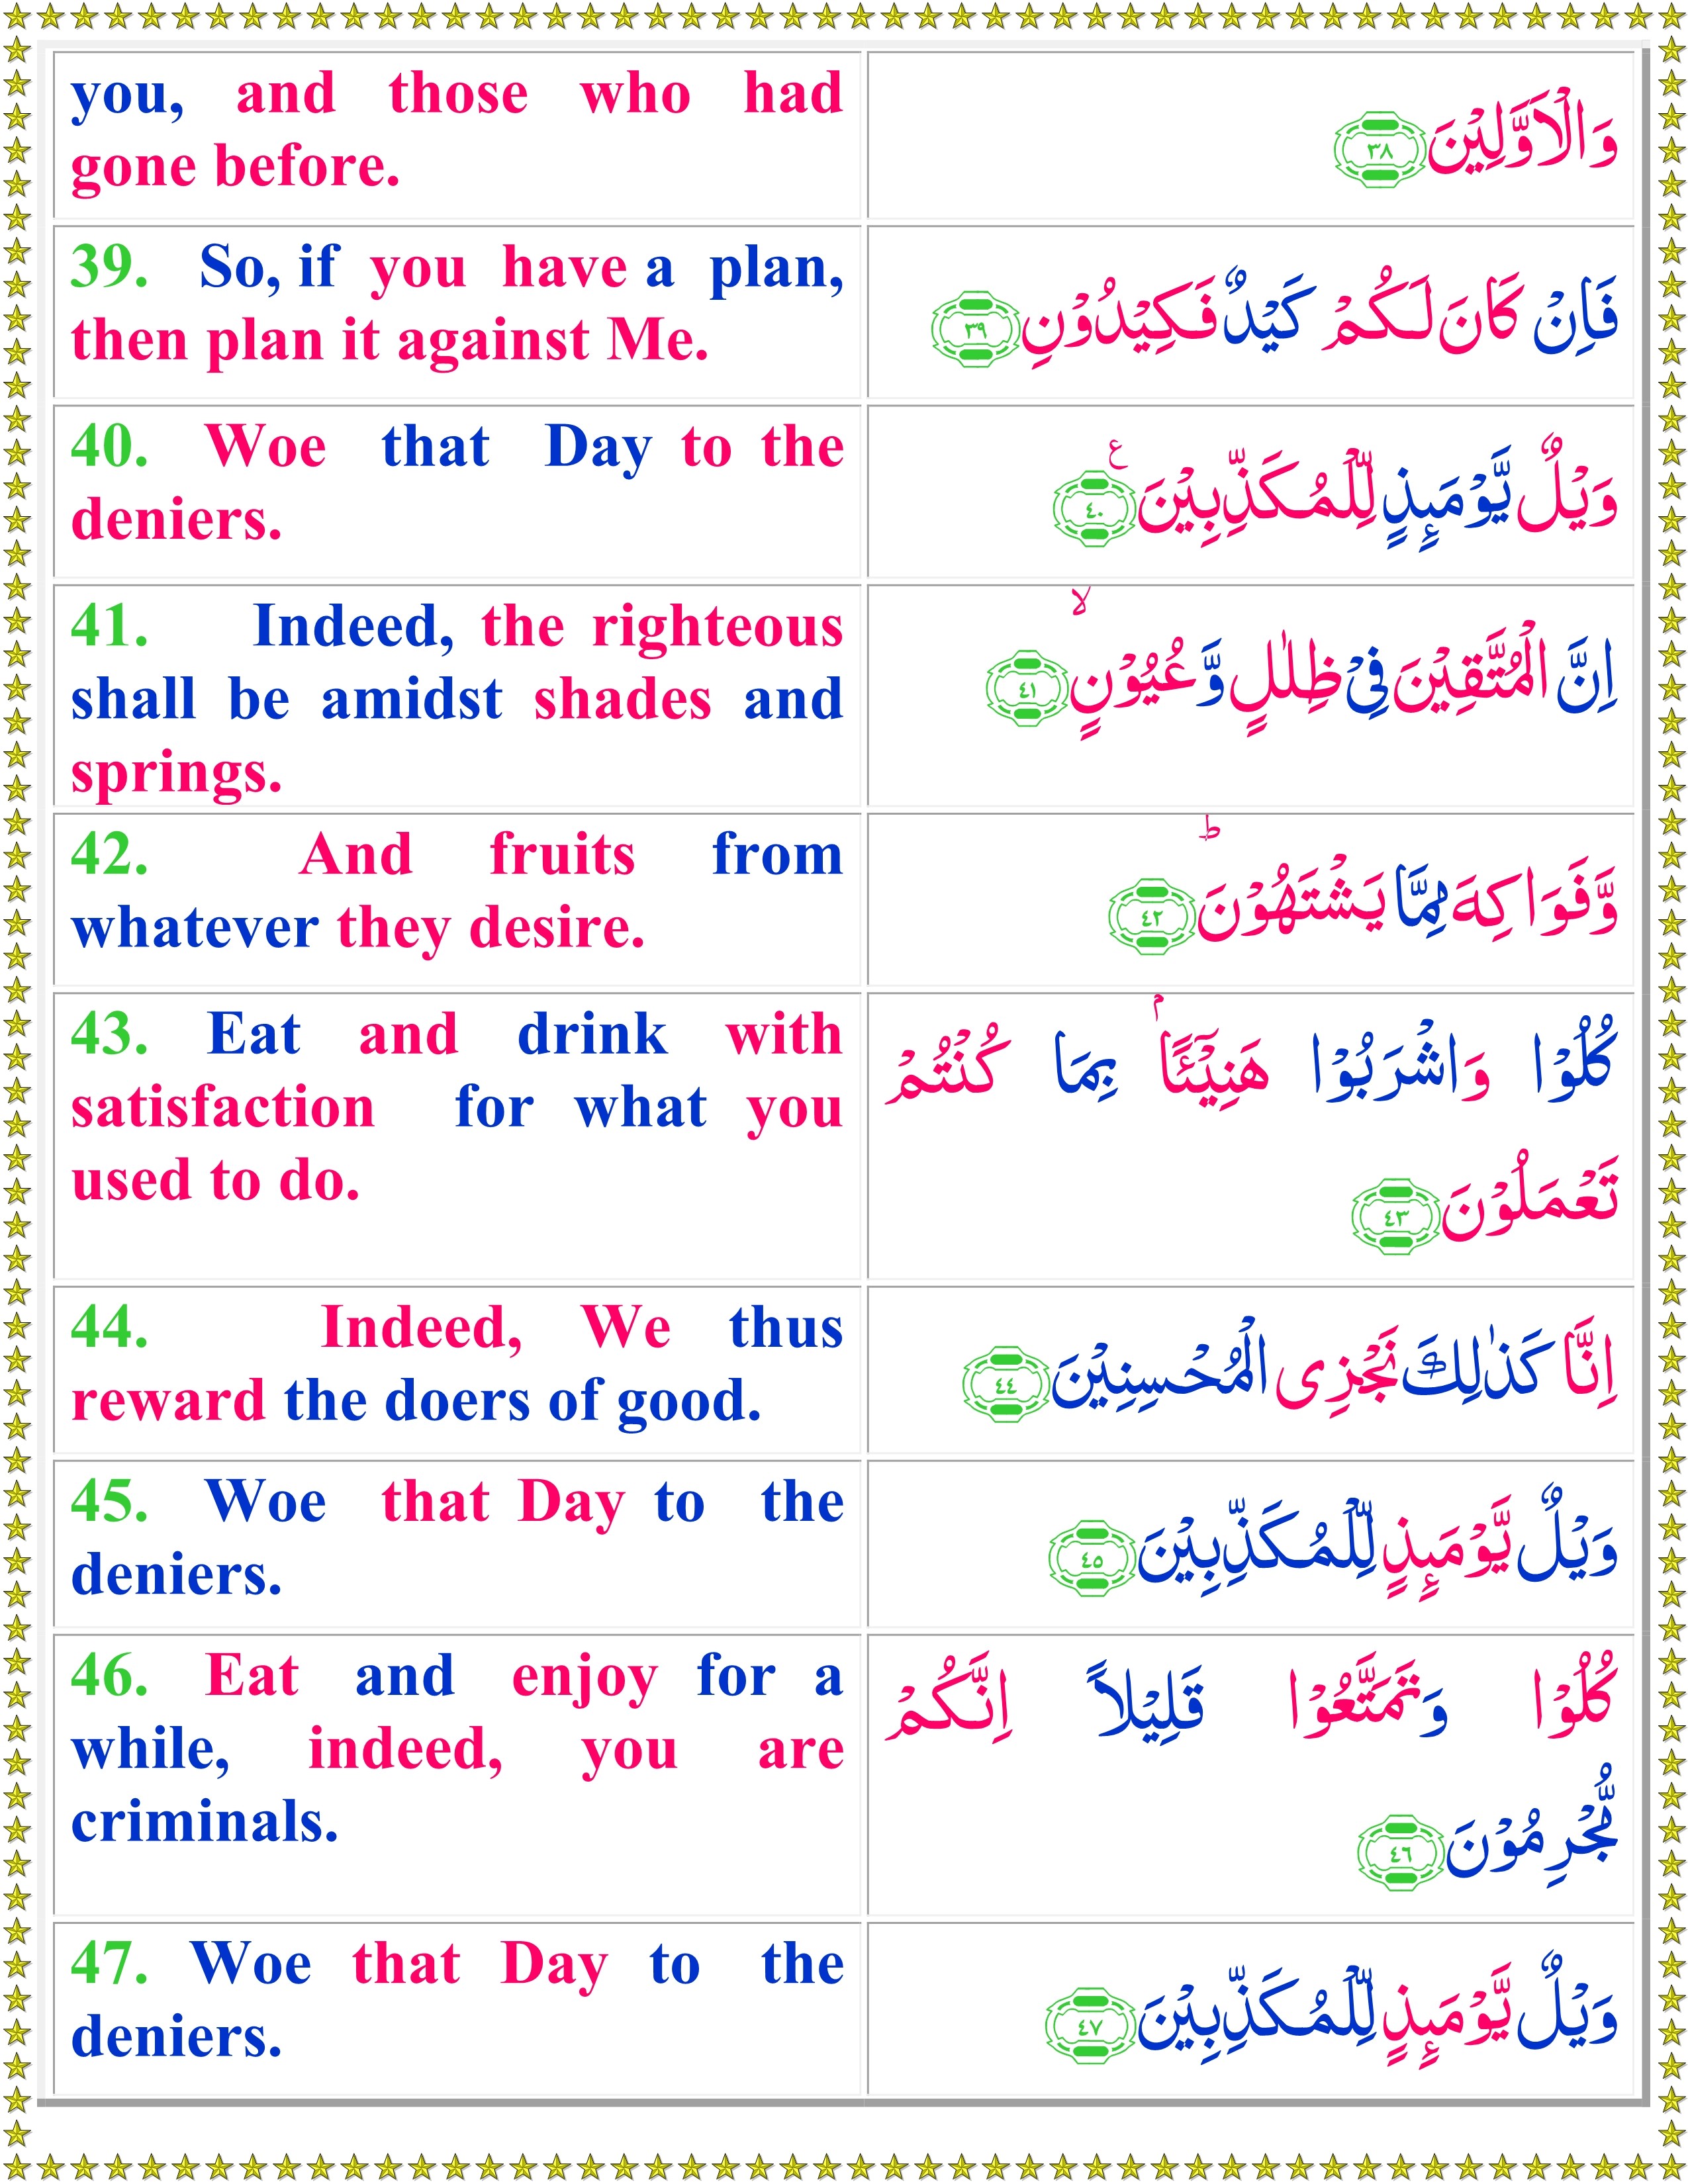 Read Surah Al Mursalat With English Translation - Quran o Sunnat